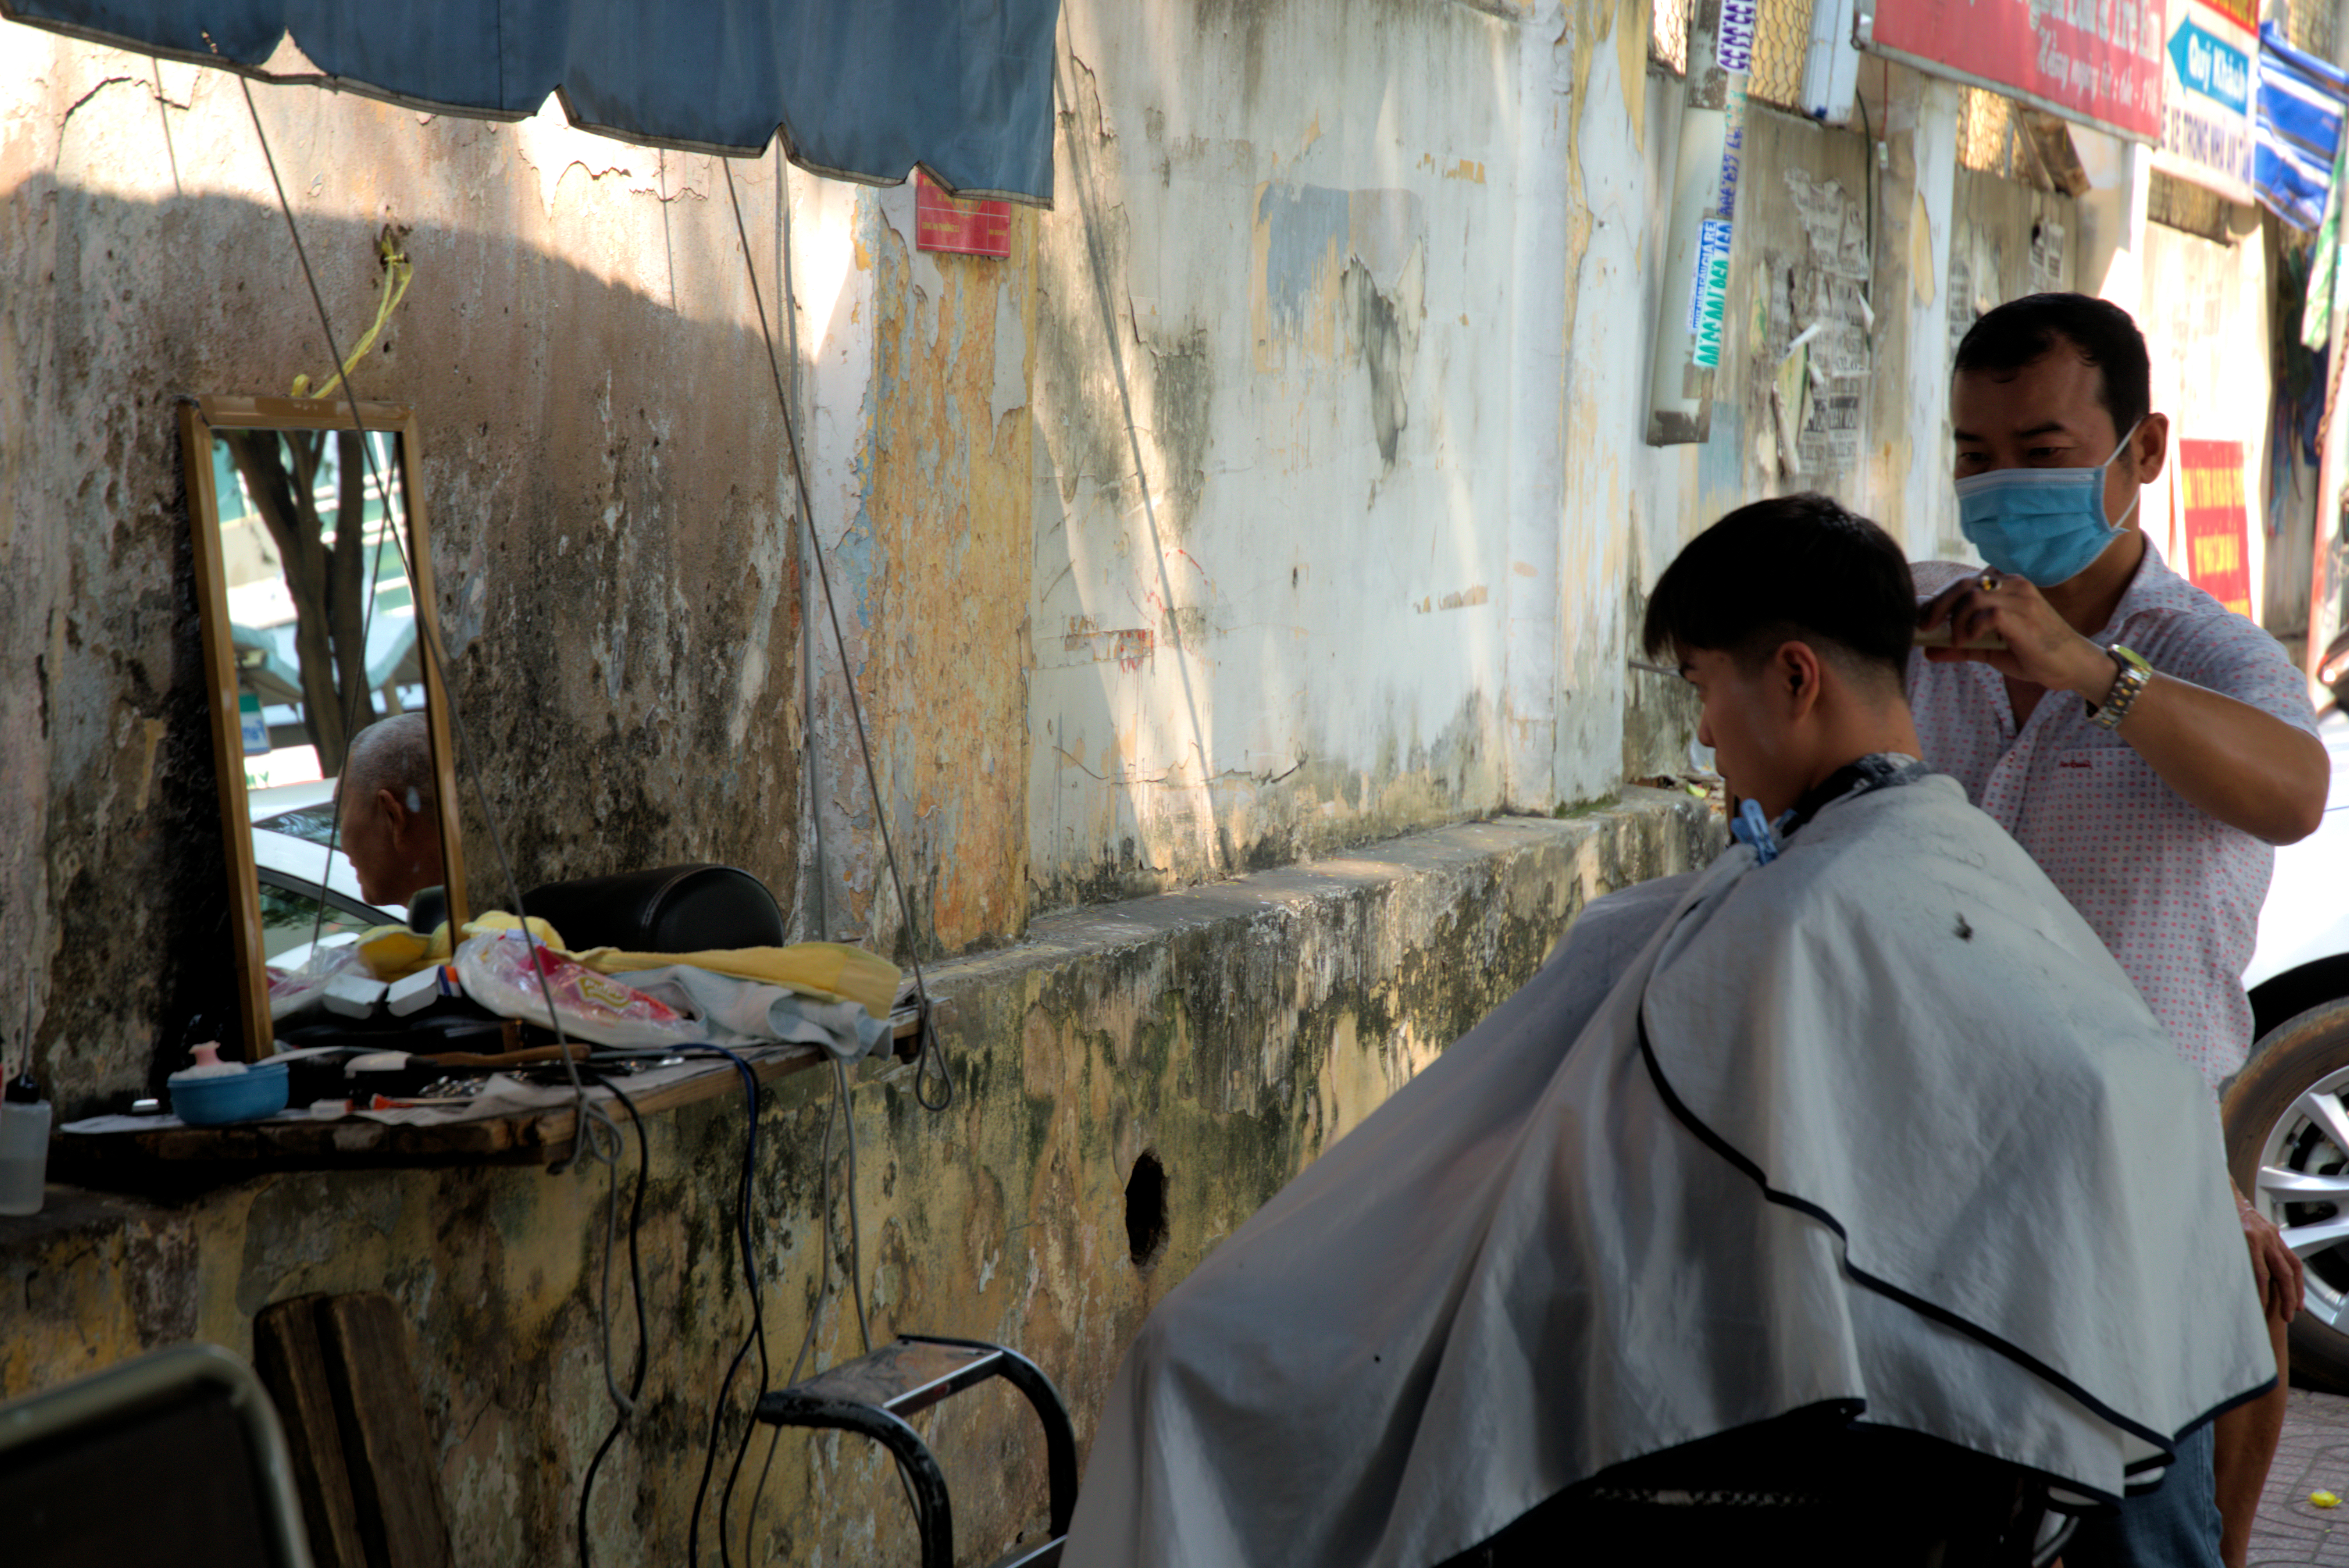 A sidewalk barber shop in Vietnam through Nunas' lens.